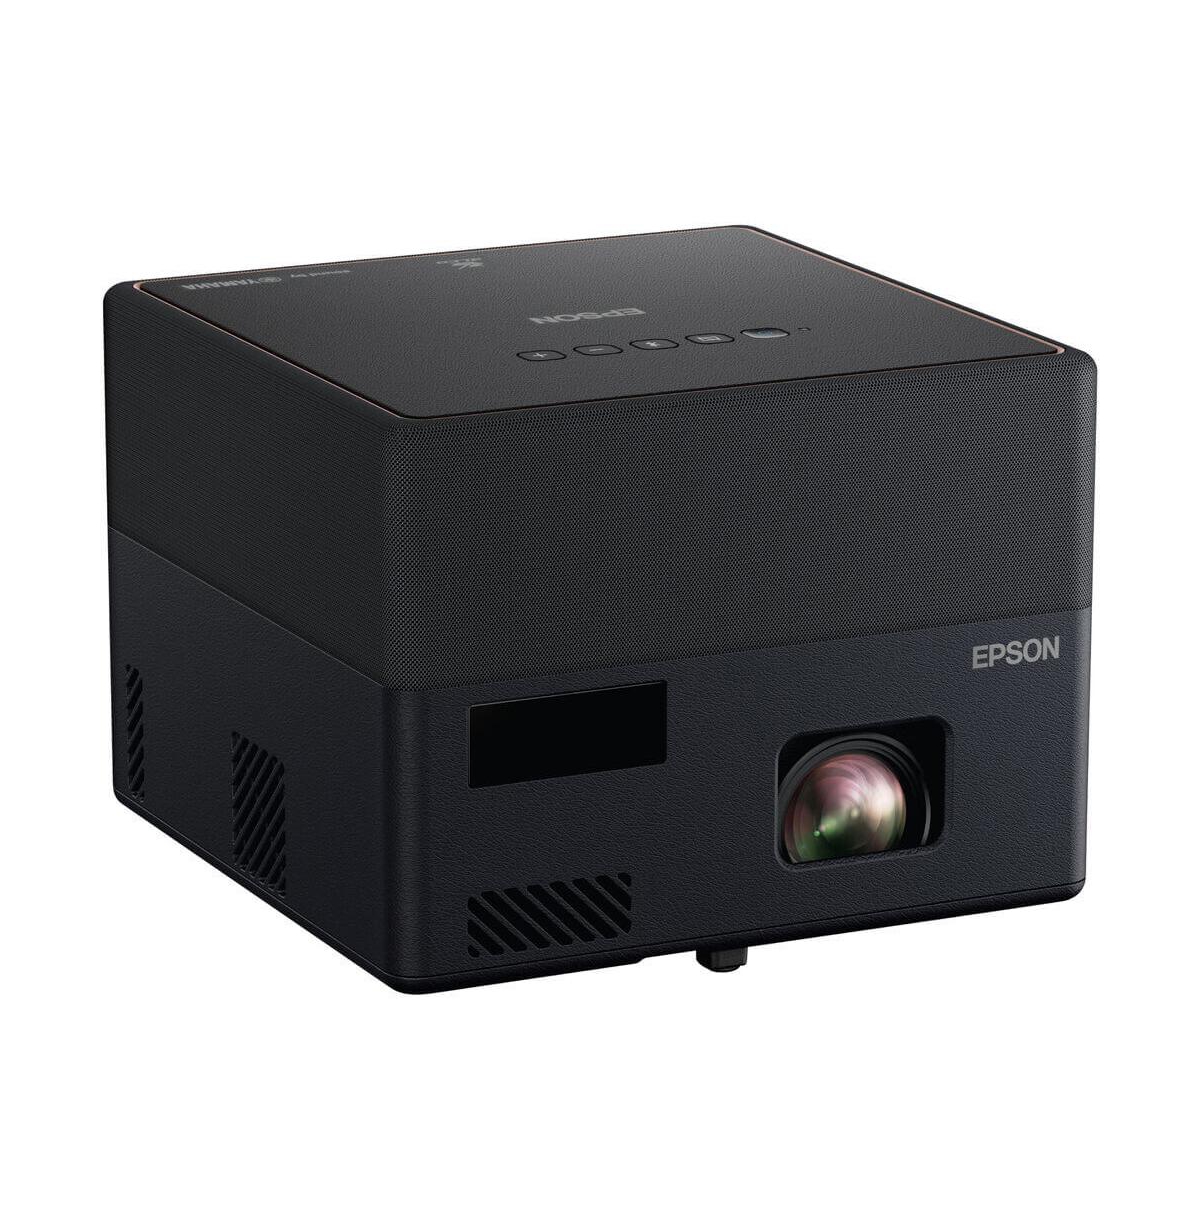 Epson EpiqVision Mini Smart Laser Projector with Android Tv - Black/Copper